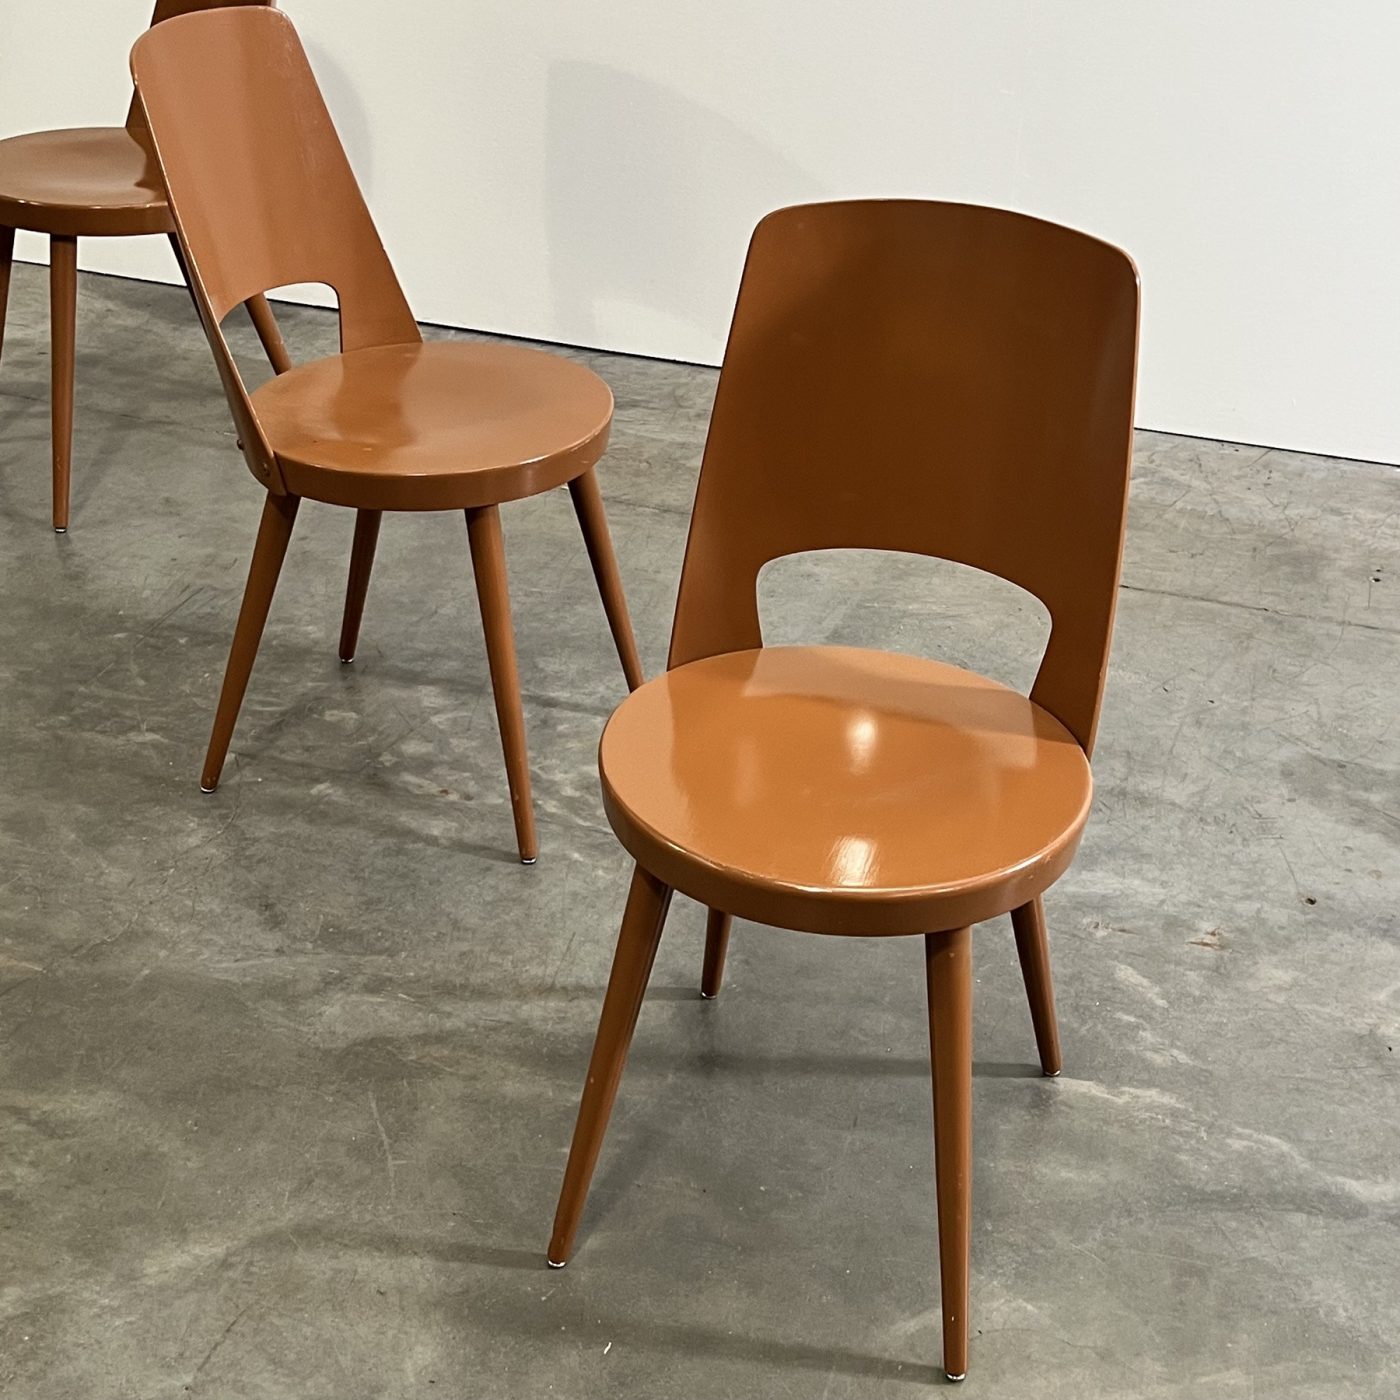 objet-vagabond-baumann-chairs0004